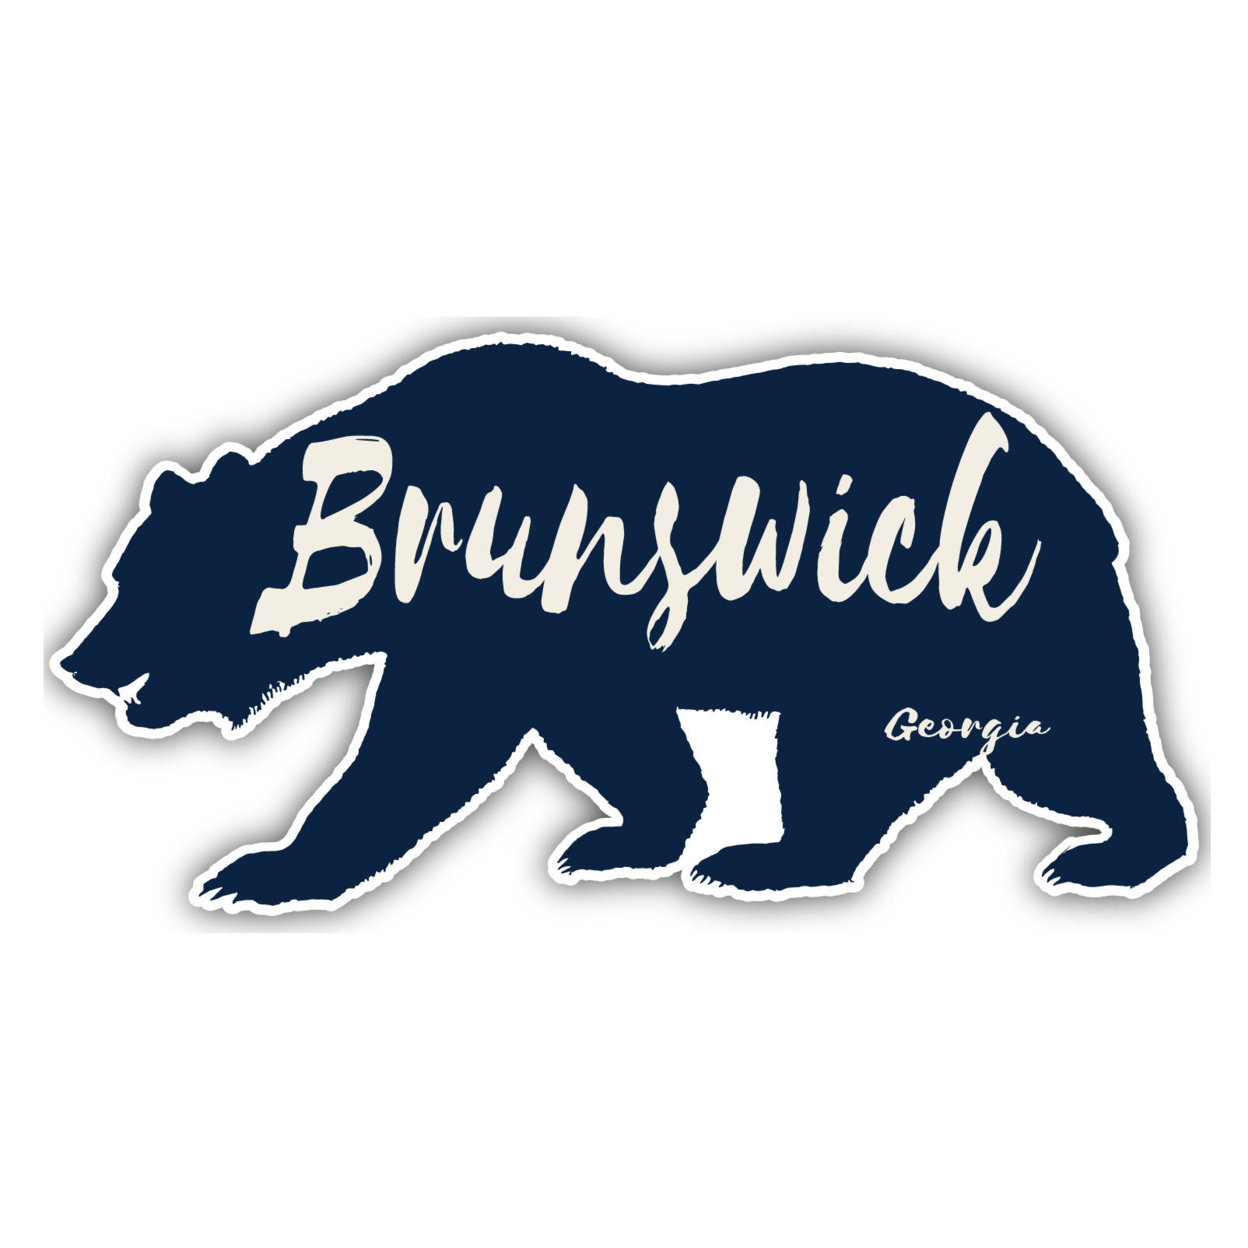 Brunswick Georgia Souvenir Decorative Stickers (Choose Theme And Size) - 4-Pack, 12-Inch, Adventures Awaits